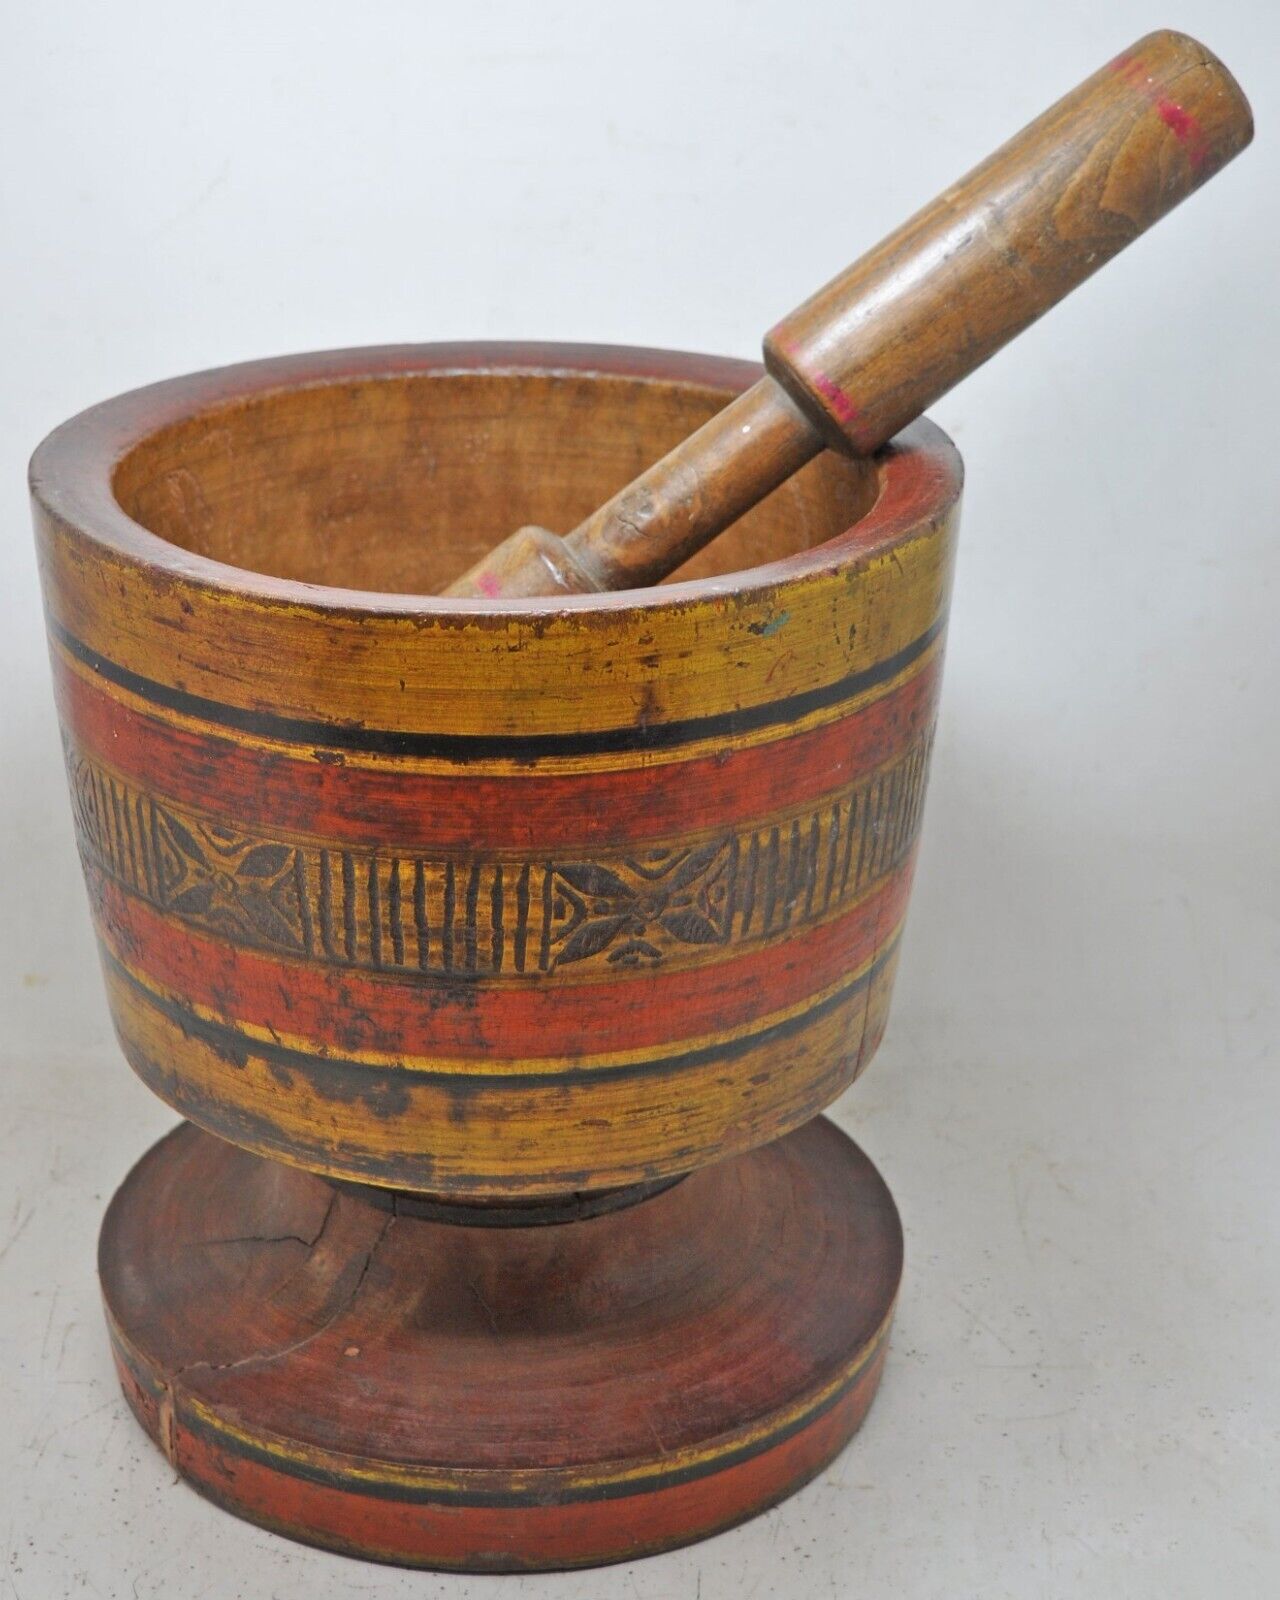 Antique Wooden Large Grains Grinding Mortar and Pestle Original Old Hand Carved